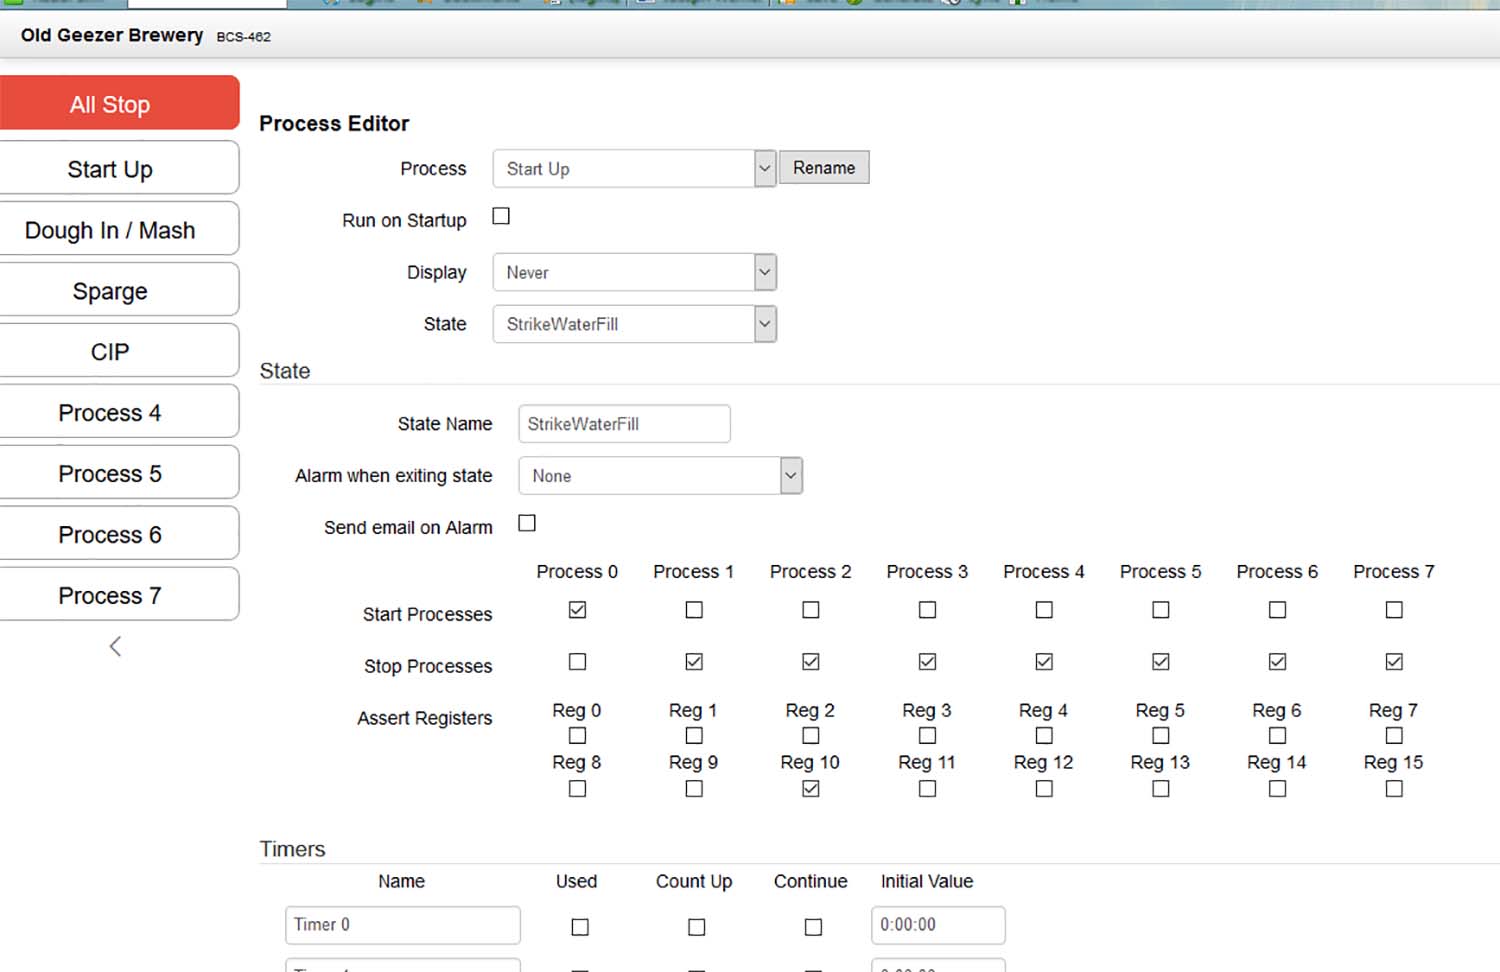 Process Editor Screen